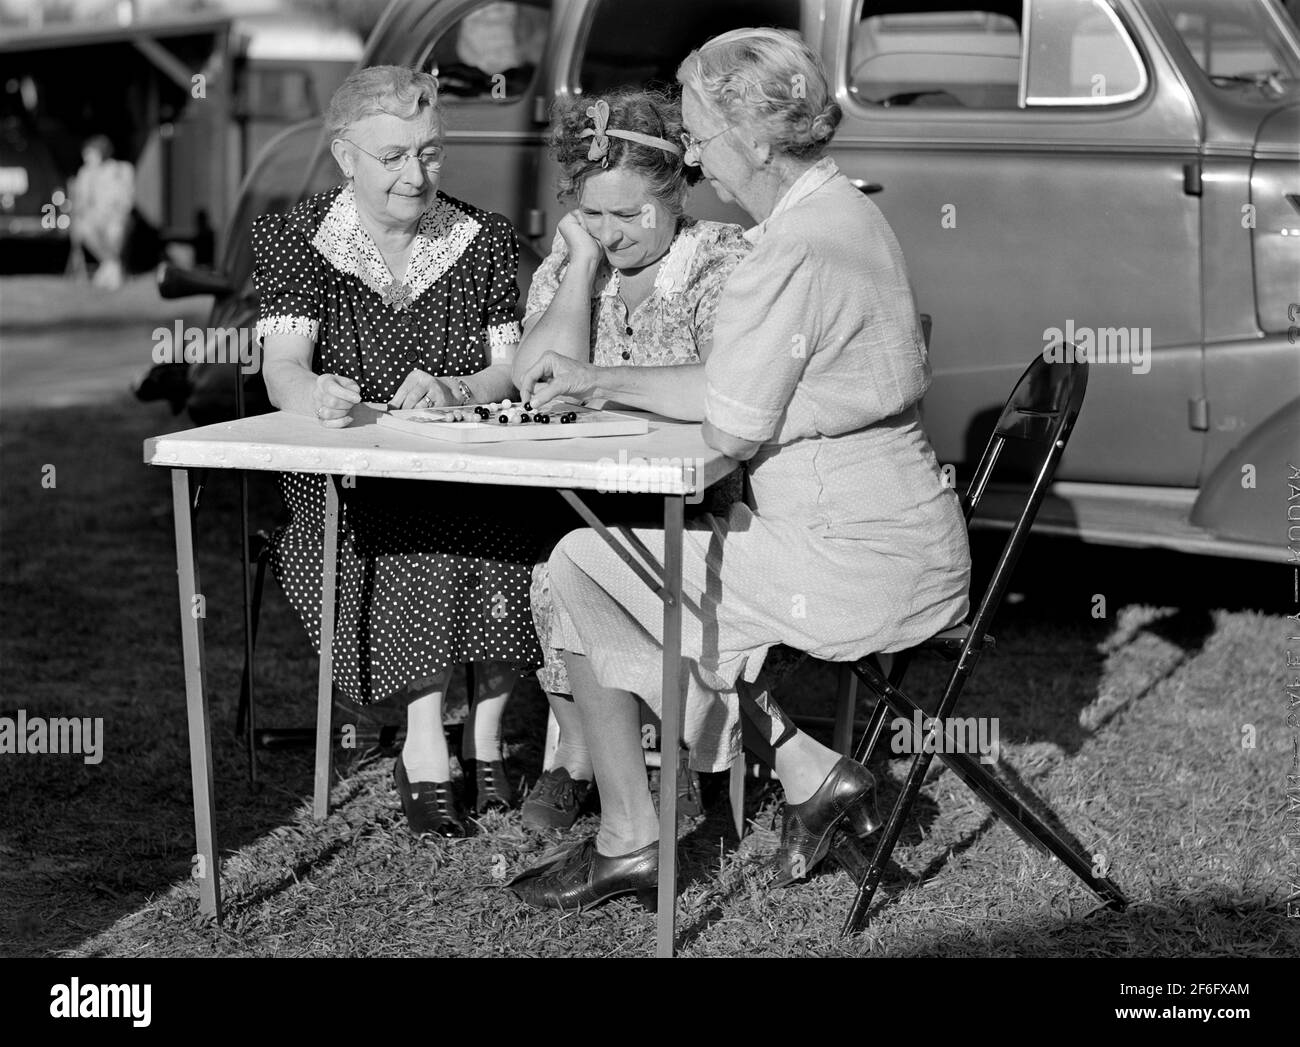 Guests at Sarasota Trailer Park playing Chinese Checkers, Sarasota, Florida, USA, Marion Post Wolcott, U.S. Farm Security Administration, January 1941 Stock Photo